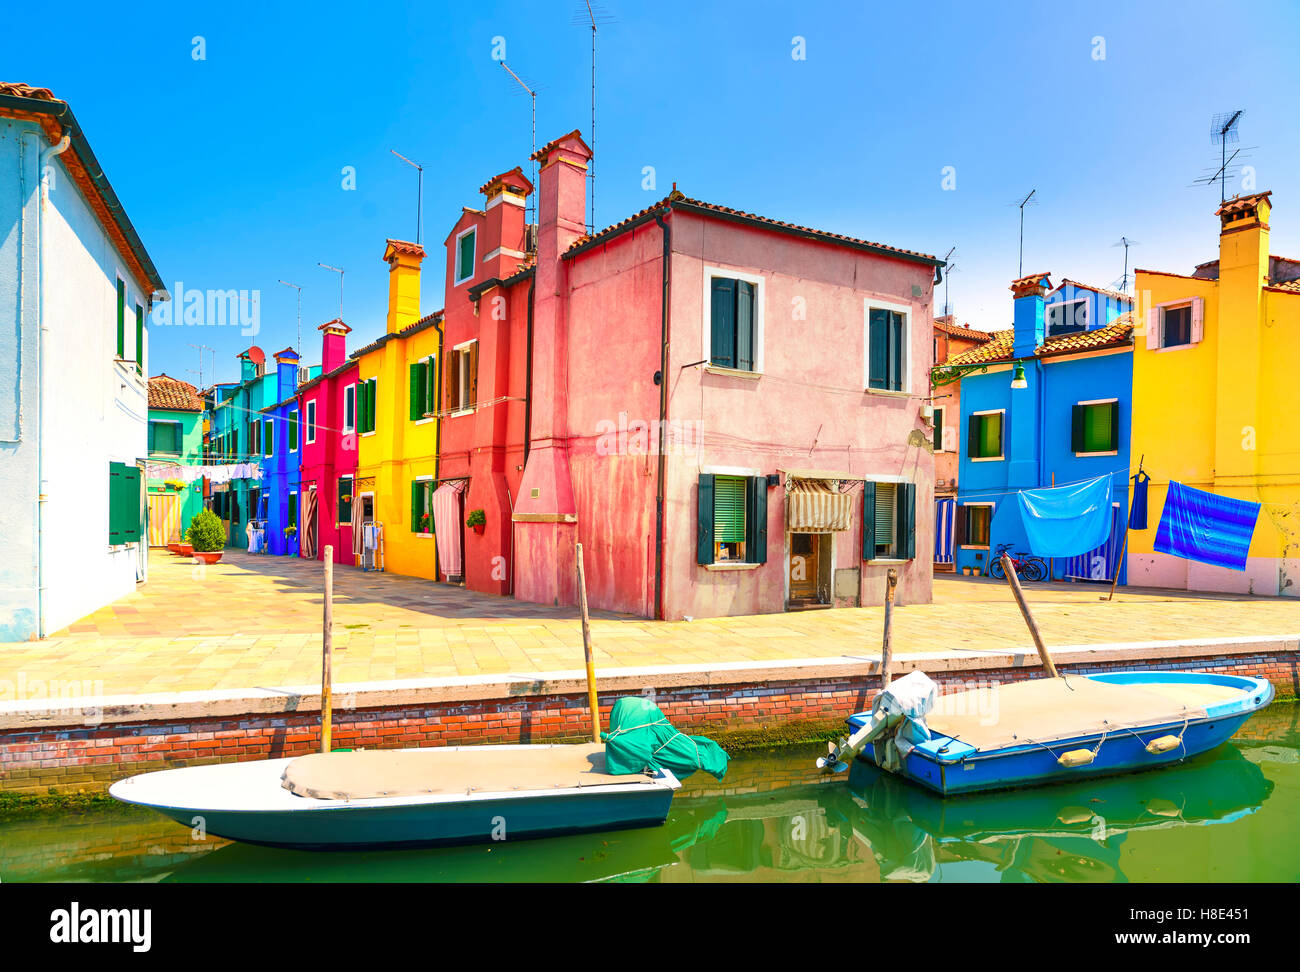 Venice landmark, Burano island canal, colorful houses and boats, Italy. Long exposure photography Stock Photo